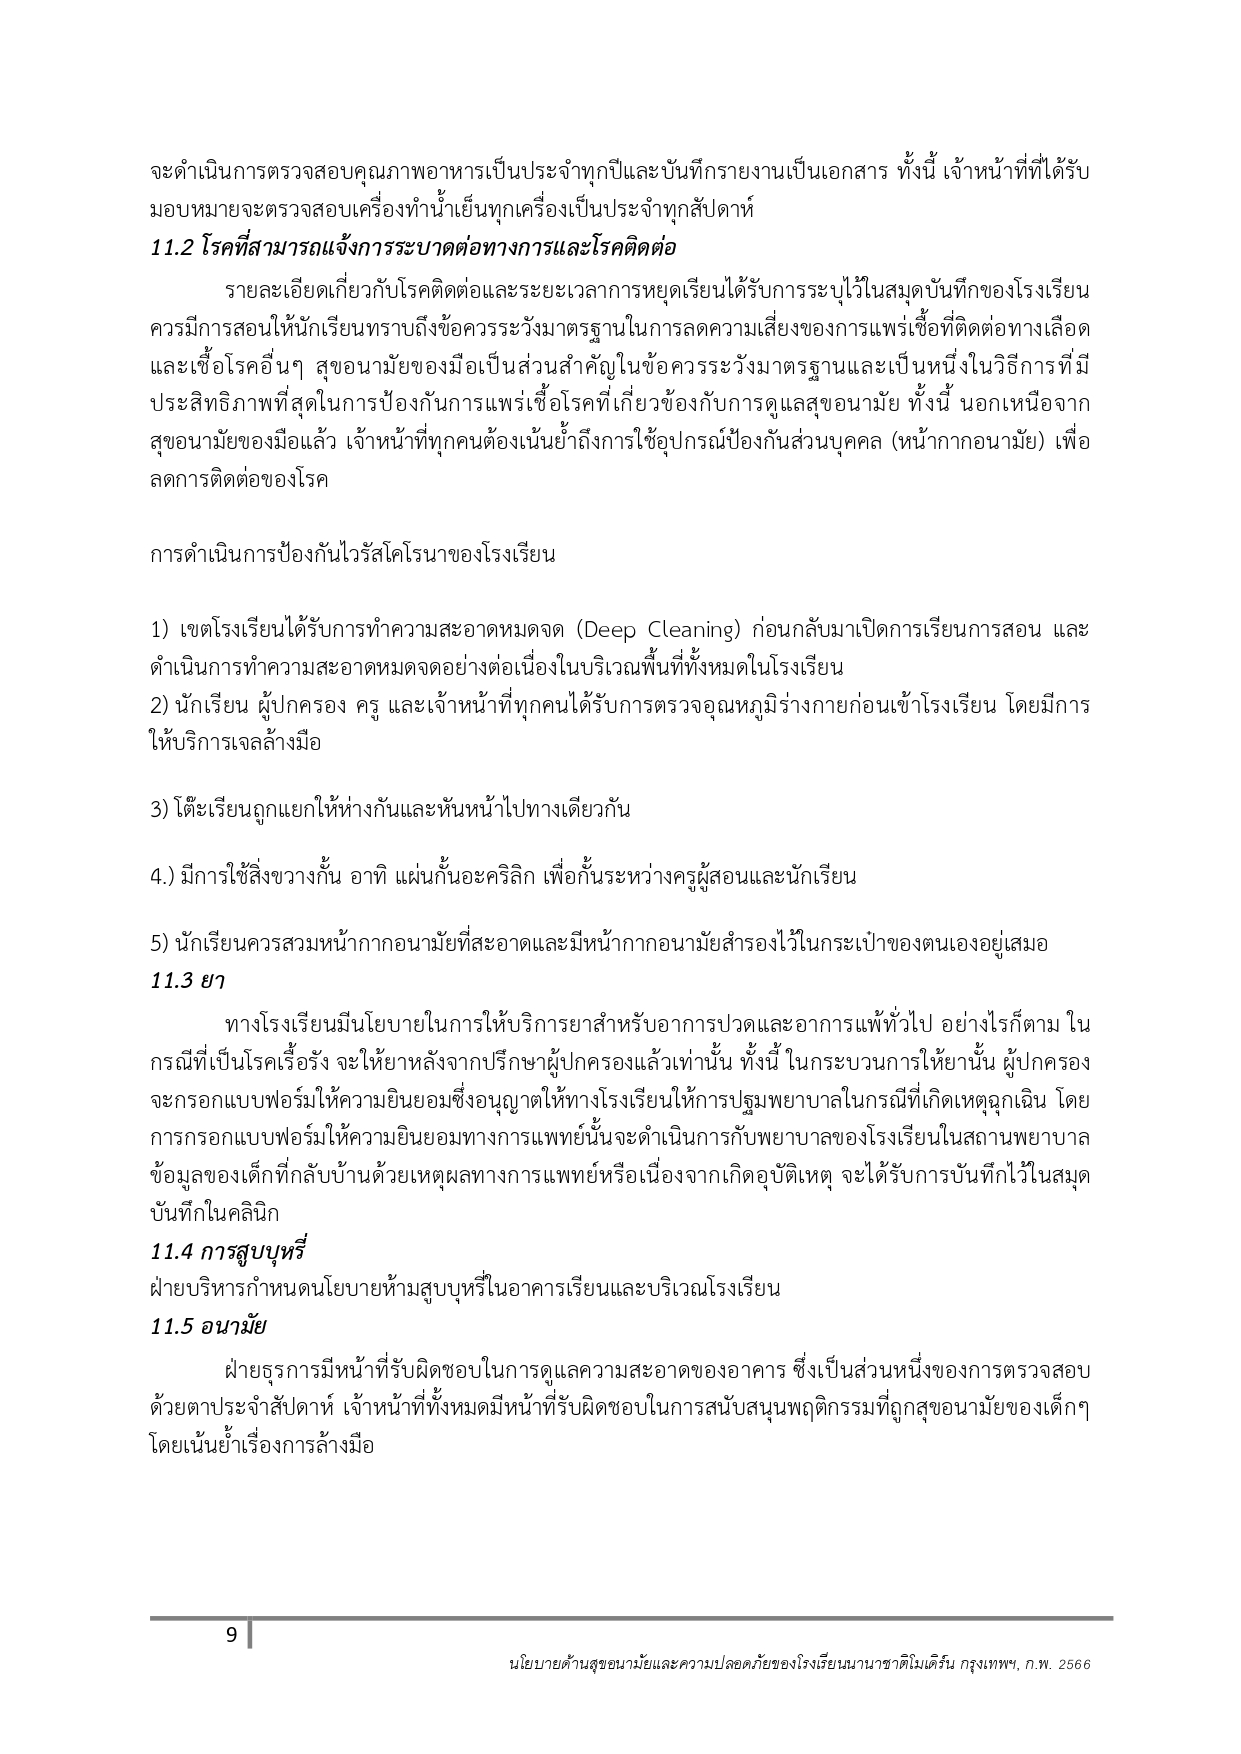 Health and Safety Policy แก้ไขภาษาไทย page 0009